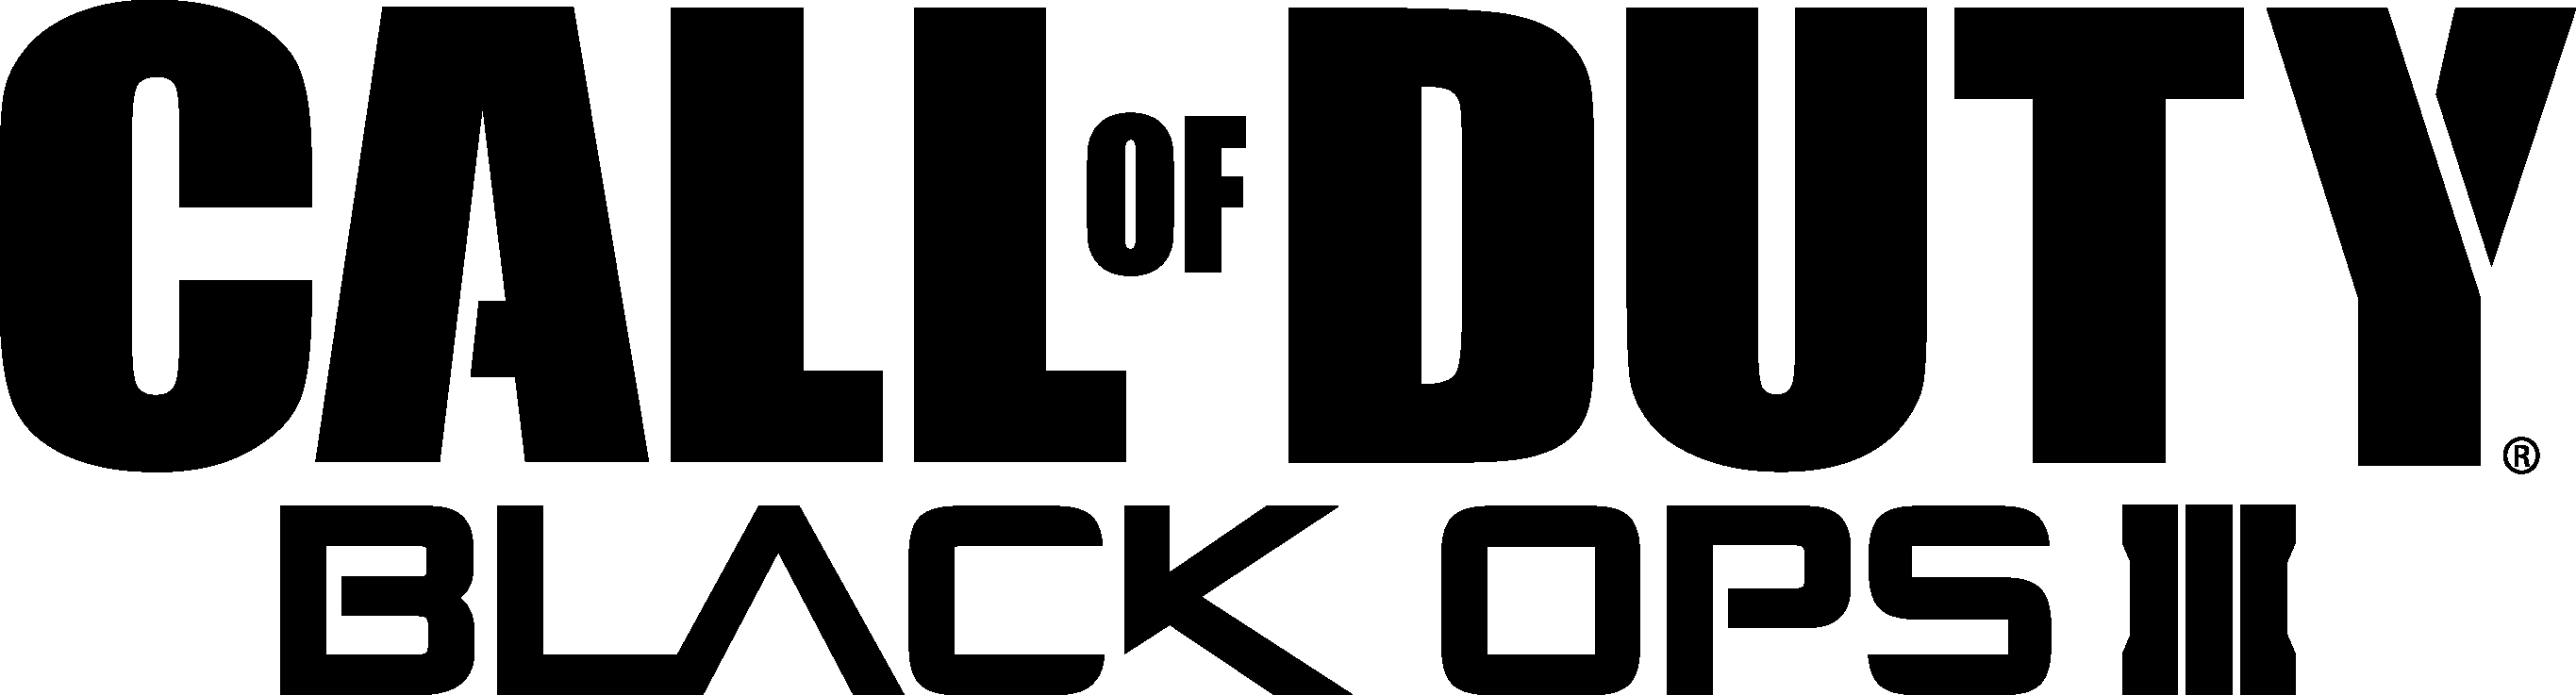 Call of Duty Black Ops 3 Logo